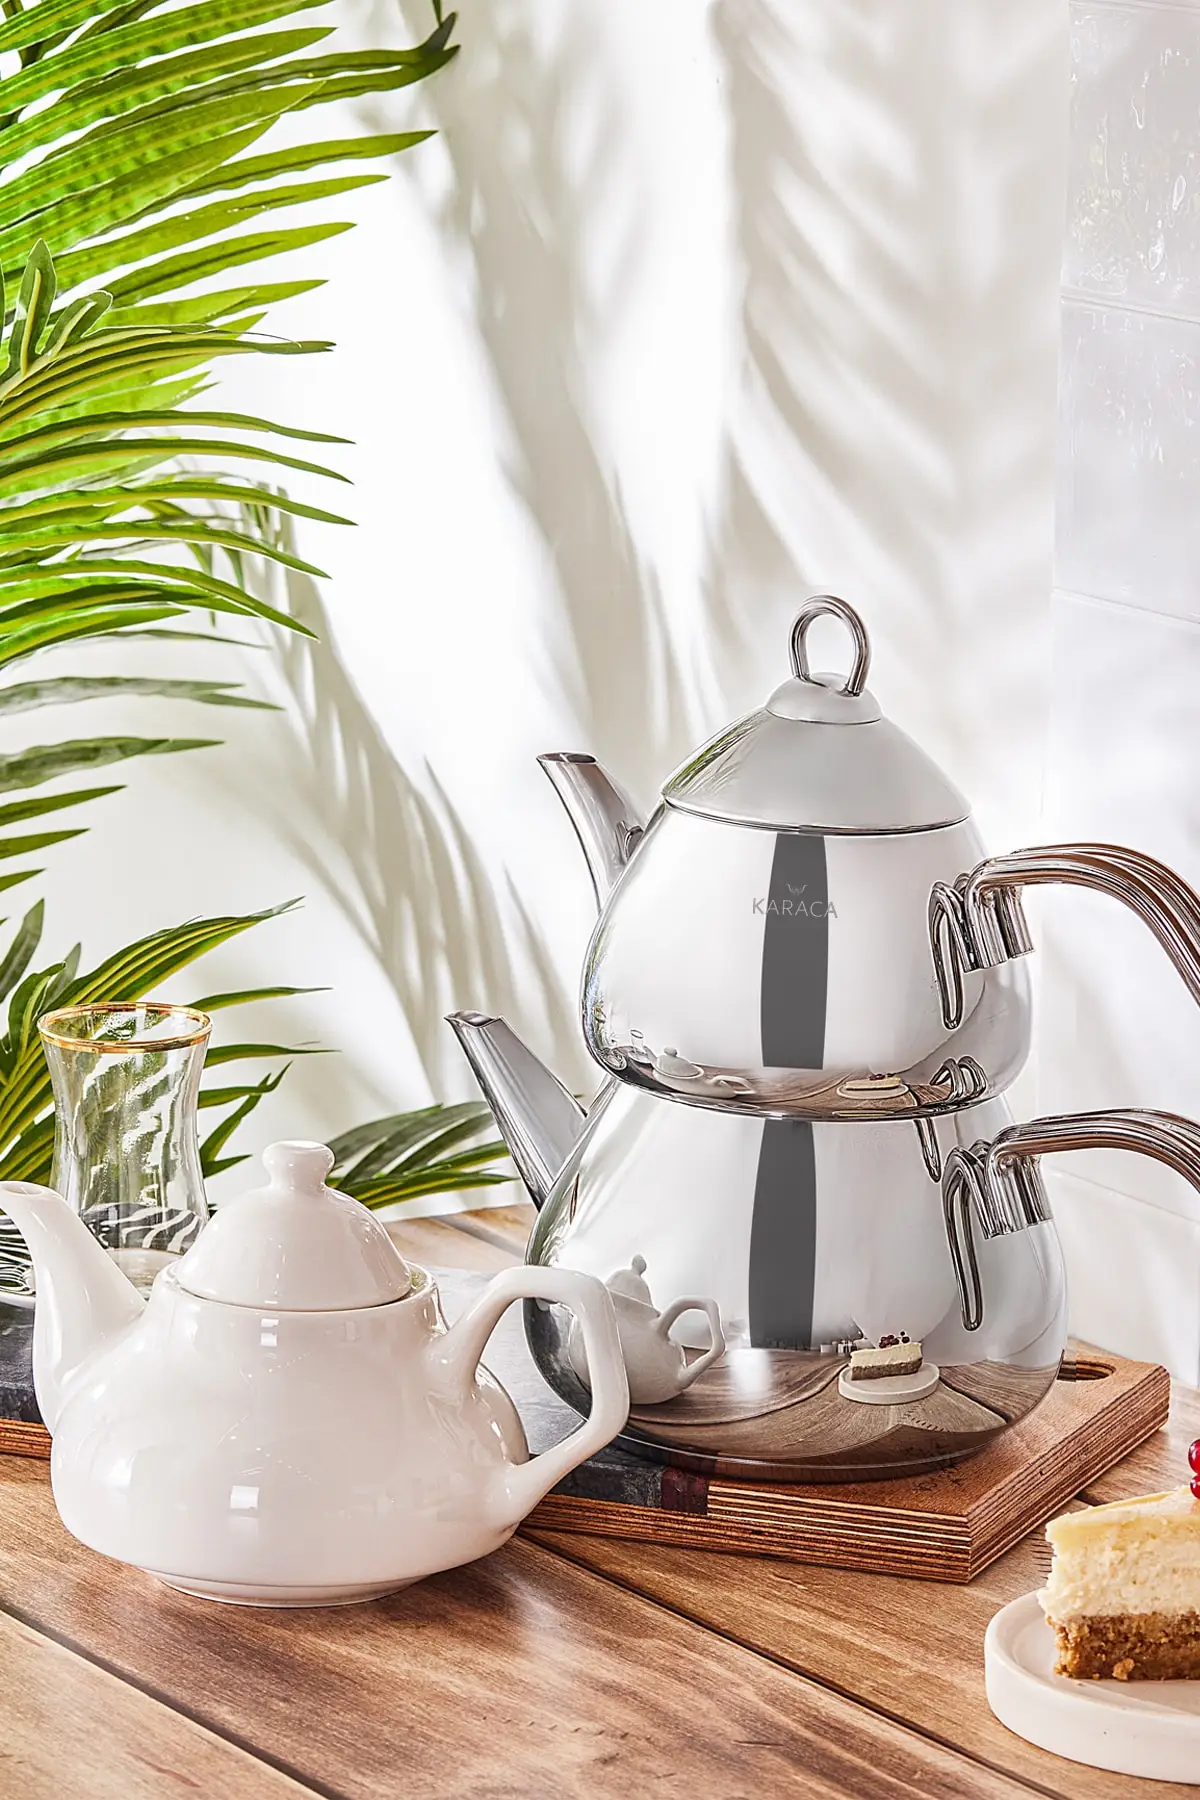 Porcelain Teapot Gift Teapot Set Porcelain Teapot Size: Teapot: 1,1 Li + Teapot Lid Water Bowl: 2 liter Material Steel